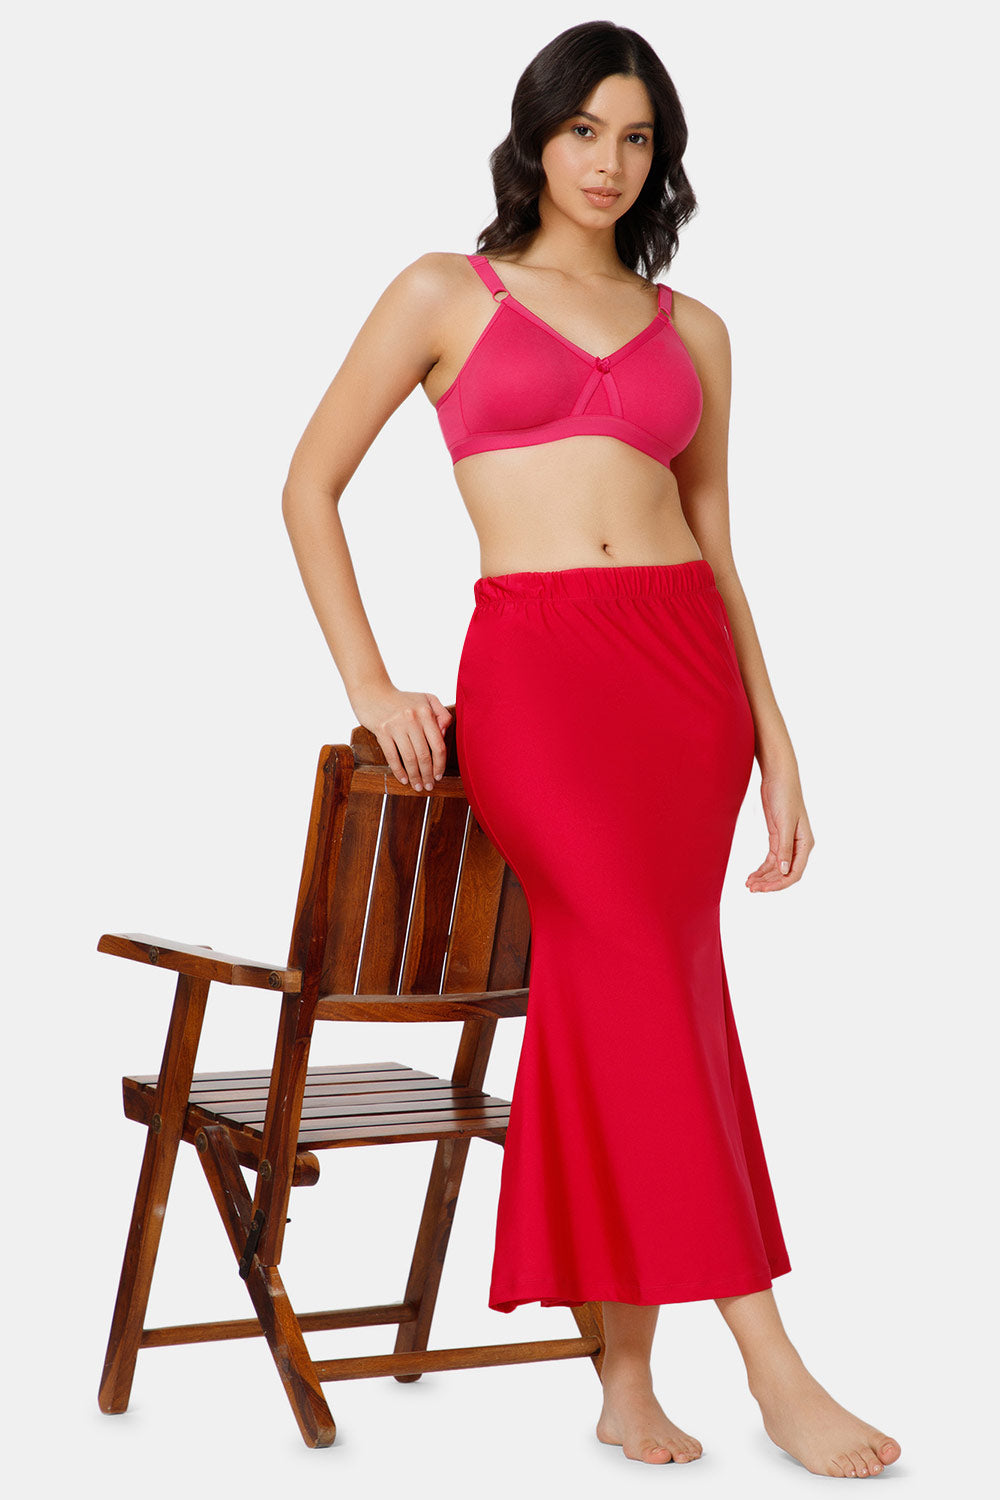 Intimacy Seamless Sweat Absorbent Mermaid Saree Shimmer Shapewear - Maharani Pink - SW03